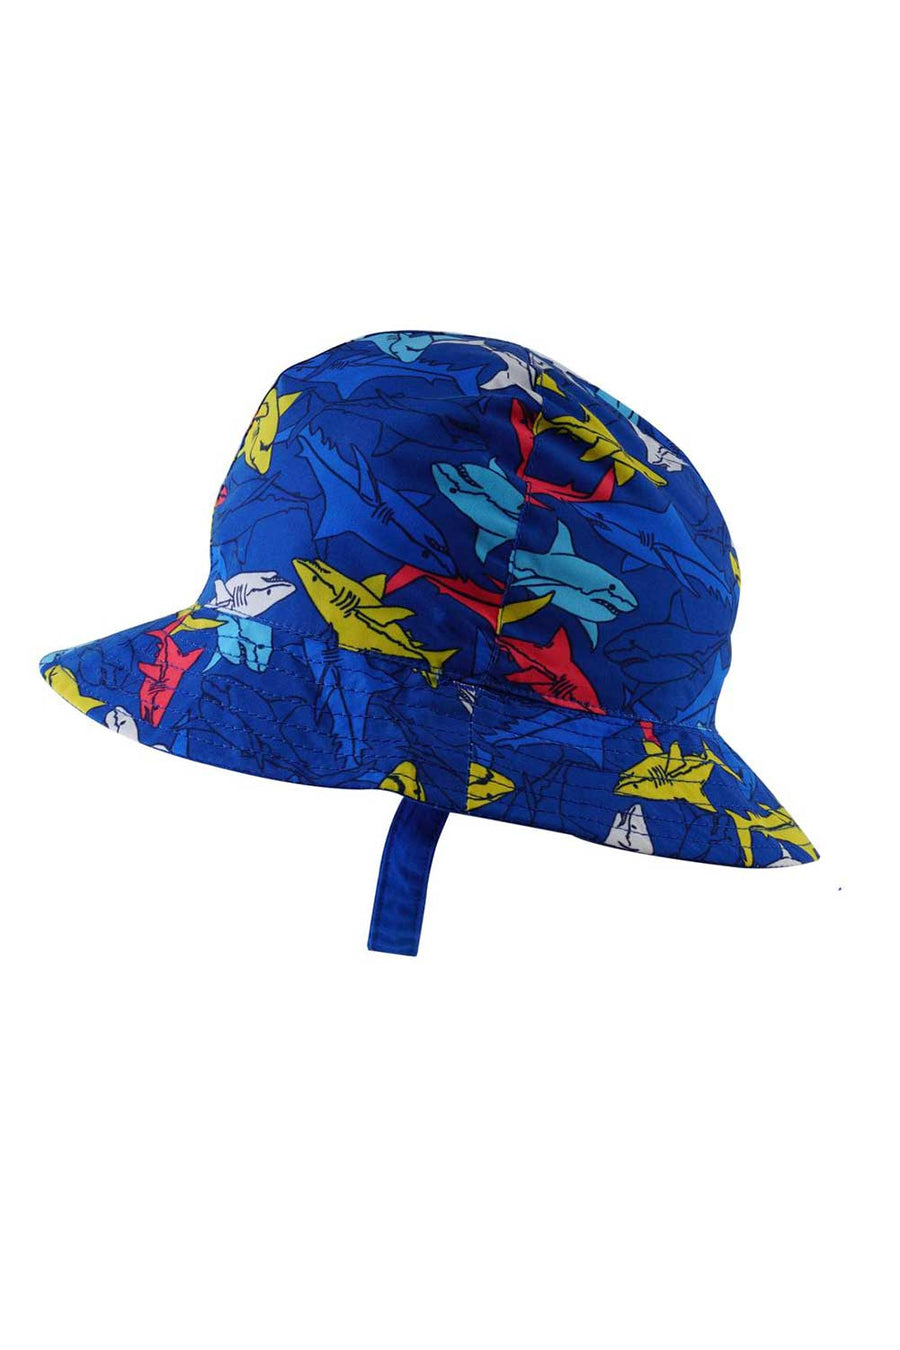 Kids UPF 50+ Sun Hat Breathable Blue Bucket Hat